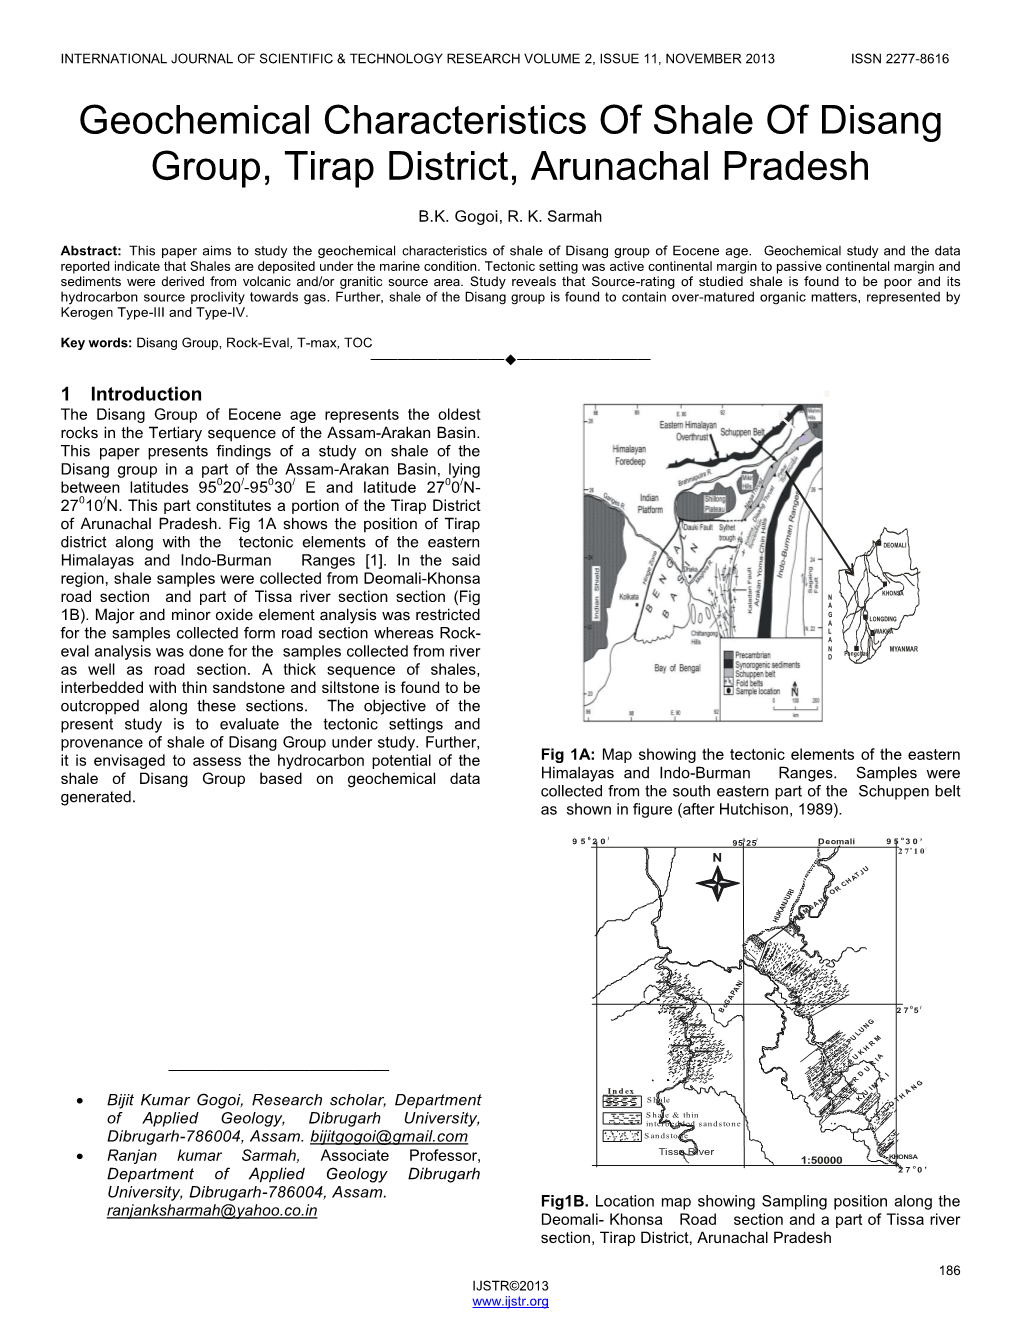 Geochemical Characteristics of Shale of Disang Group, Tirap District, Arunachal Pradesh